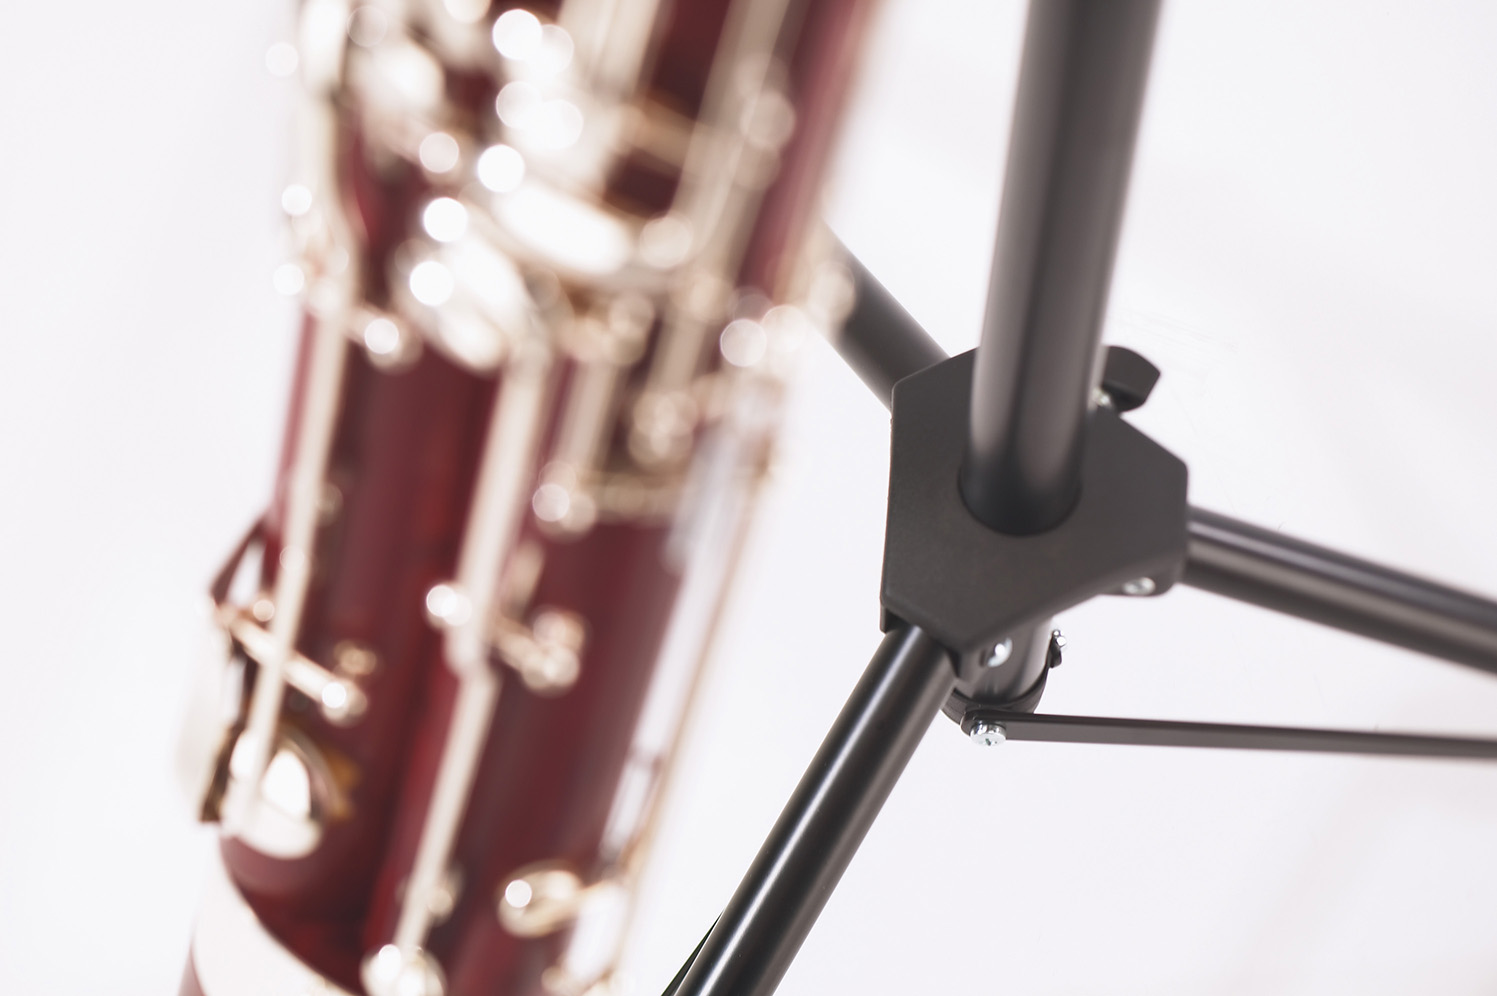 König & Meyer Instrument Stand - Bassoon - 150/1